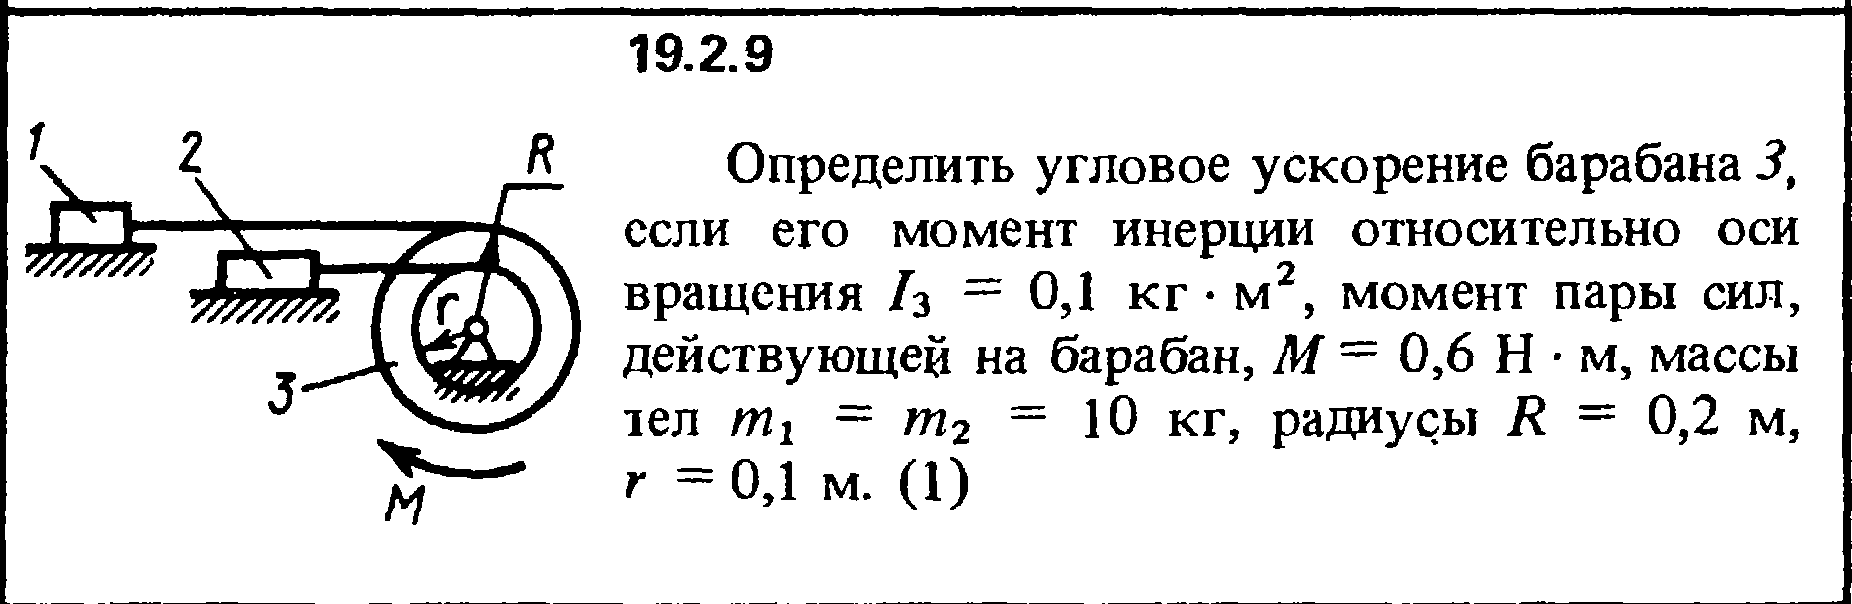 Решение 19.2.9 из сборника (решебника) Кепе О.Е. 1989